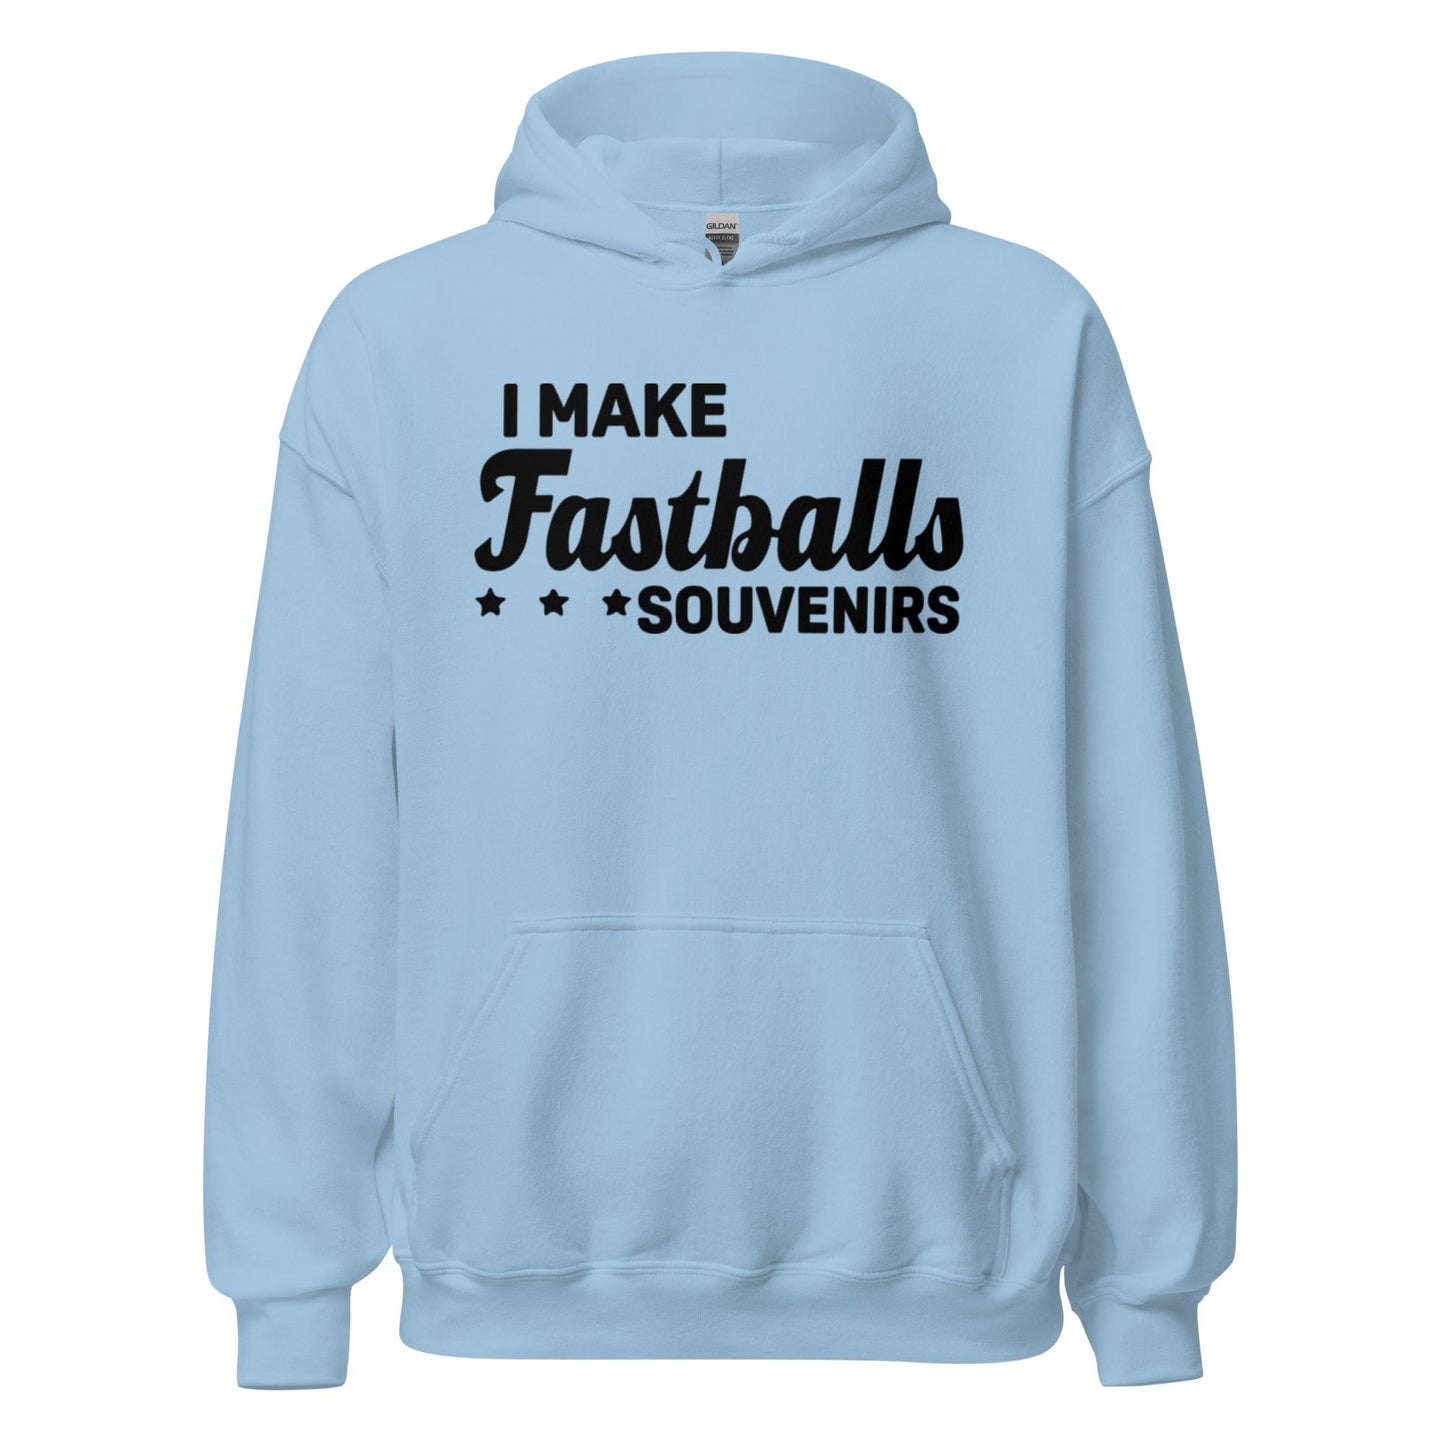 I Make Fastballs Souvenirs - Adult Hoodie